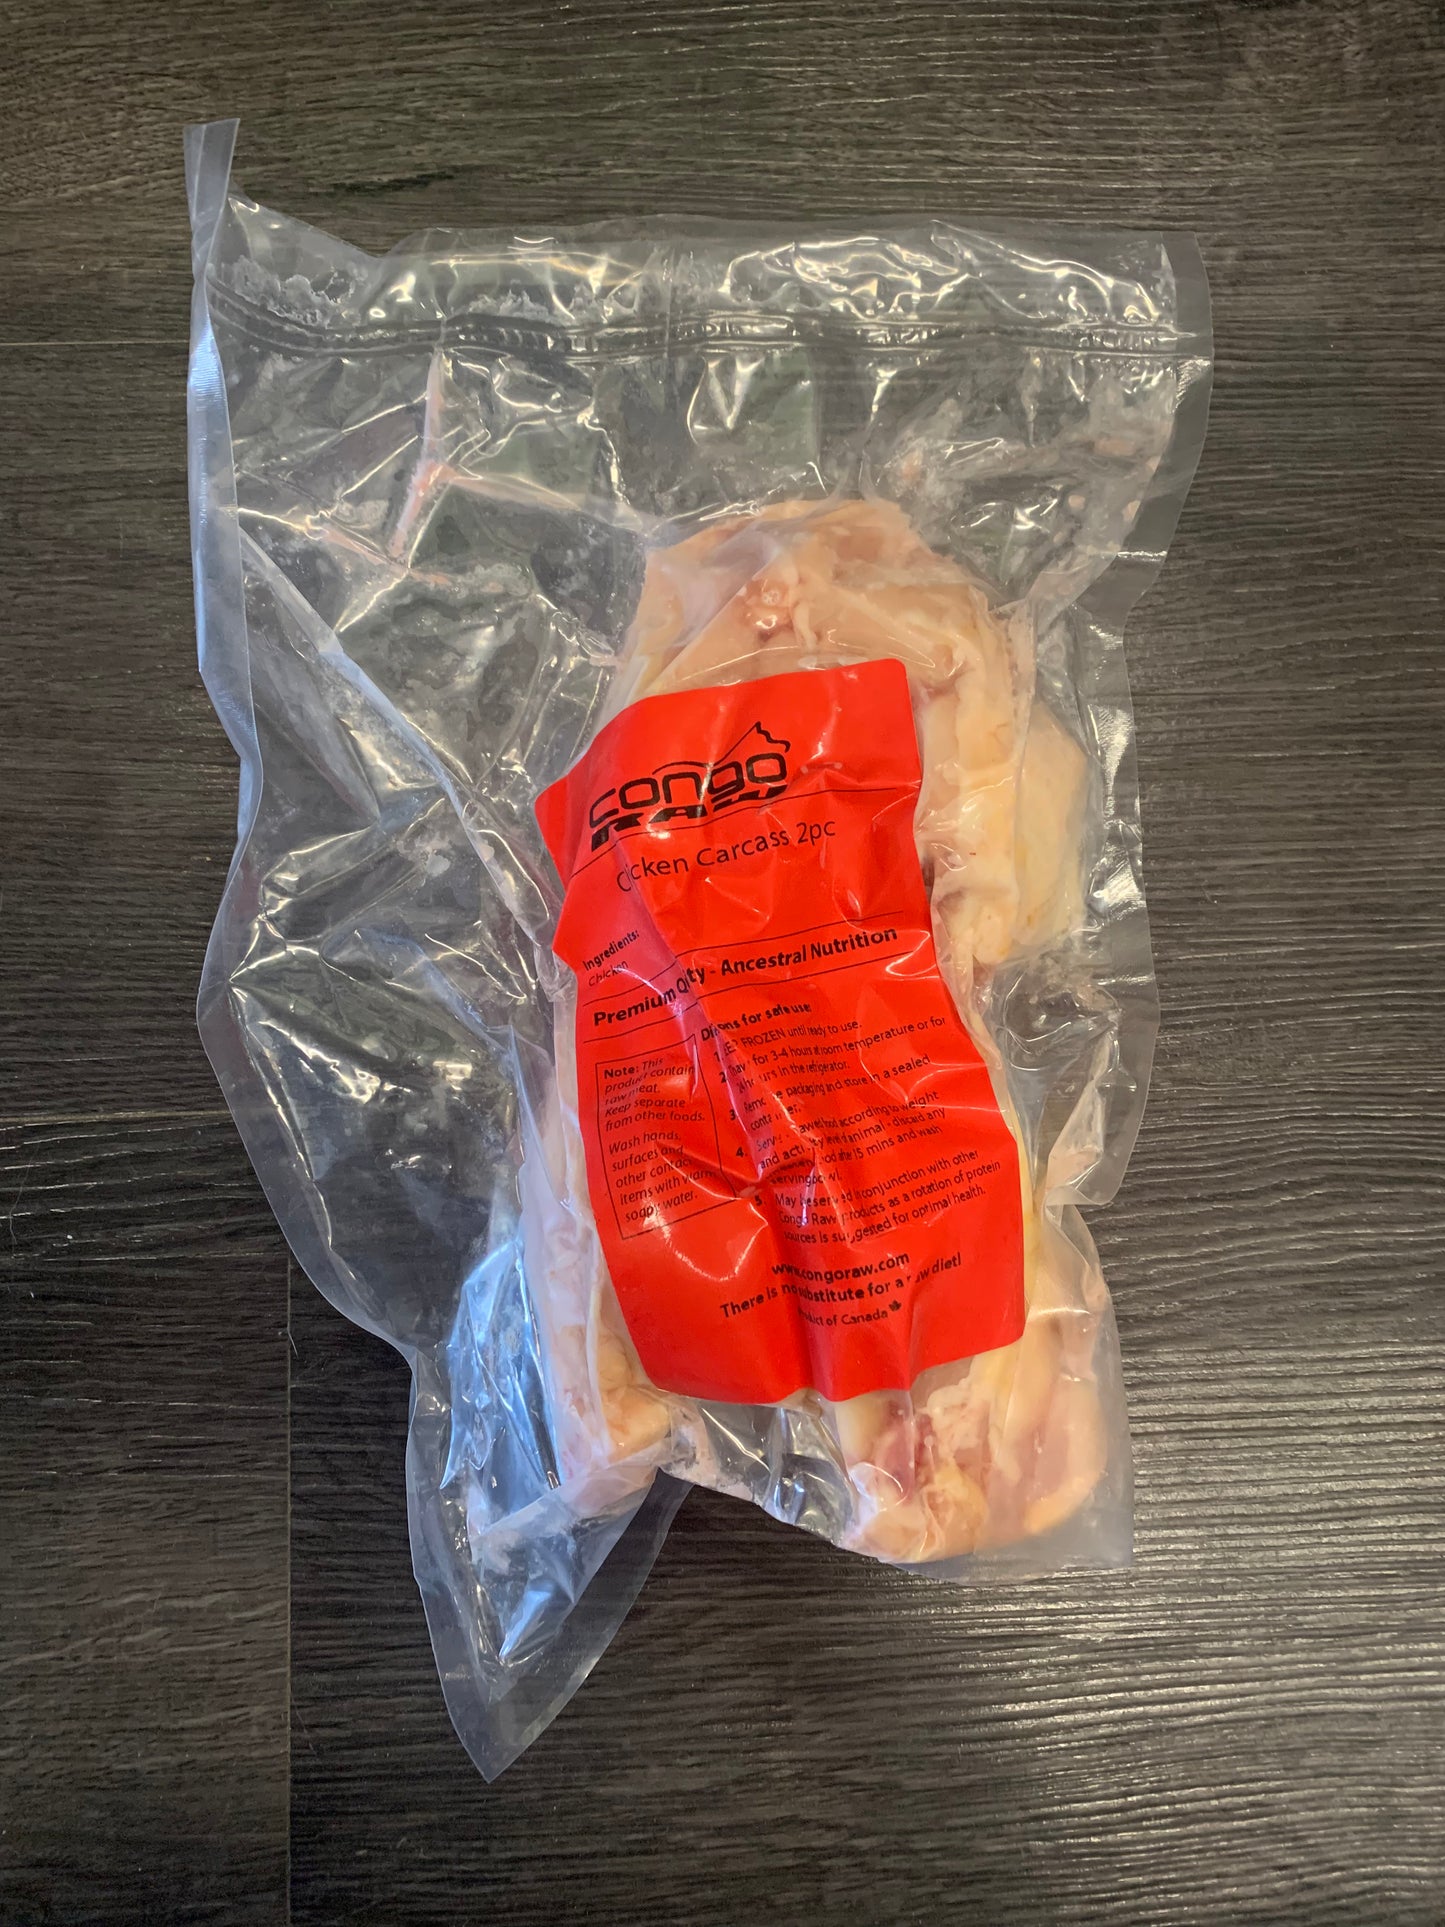 Congo 1-2pc Chicken Carcass (1.25lb) - Tail Blazers Etobicoke